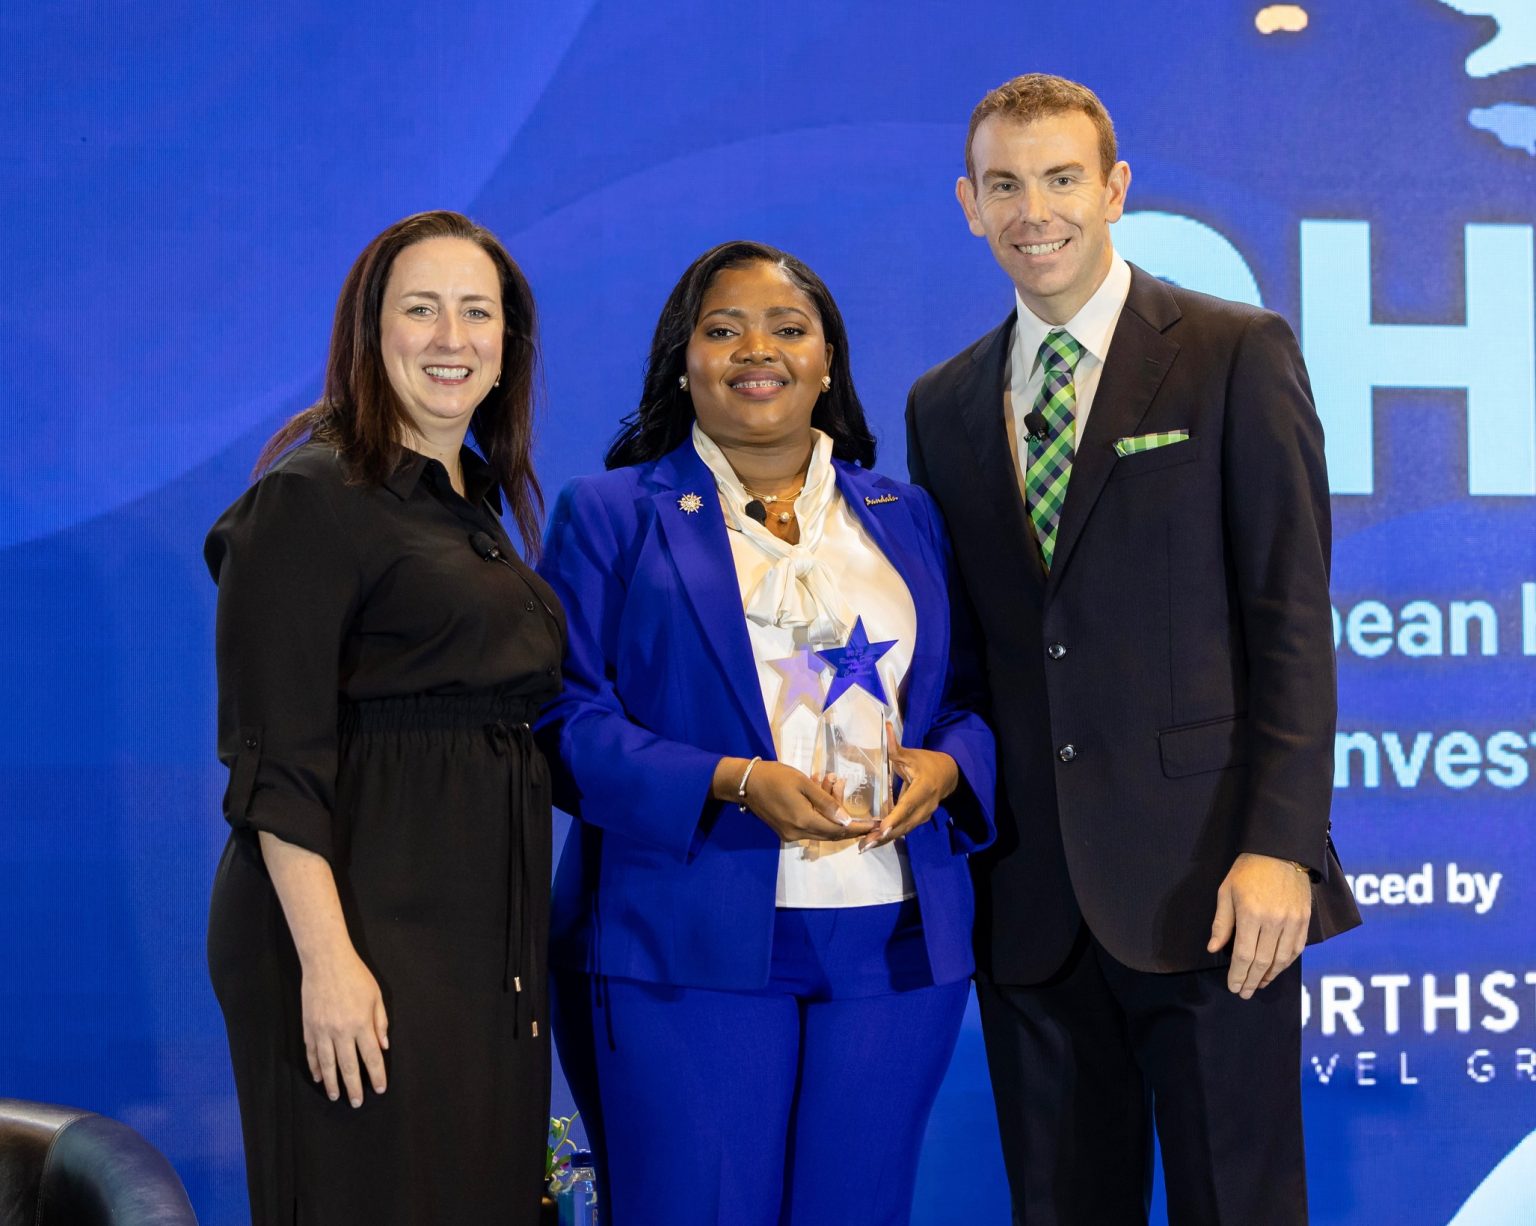 Rising Star Award – Caribbean presented to Julianna Musgrove at CHRIS